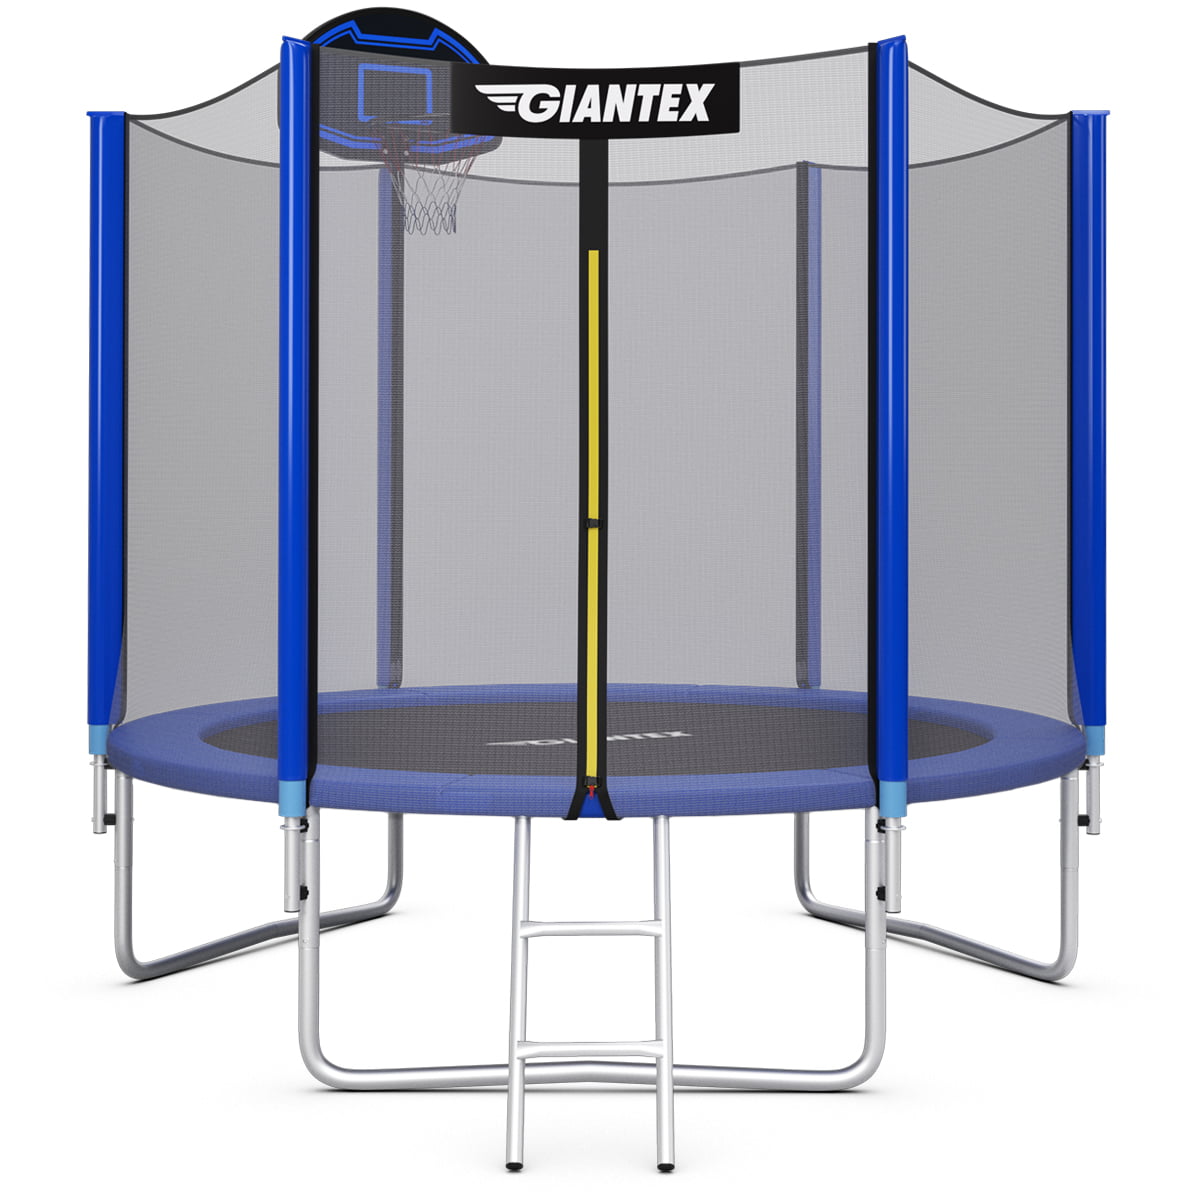 Topbuy 10' Trampoline with Safety Enclosure Net, Basketball Hoop Ladder